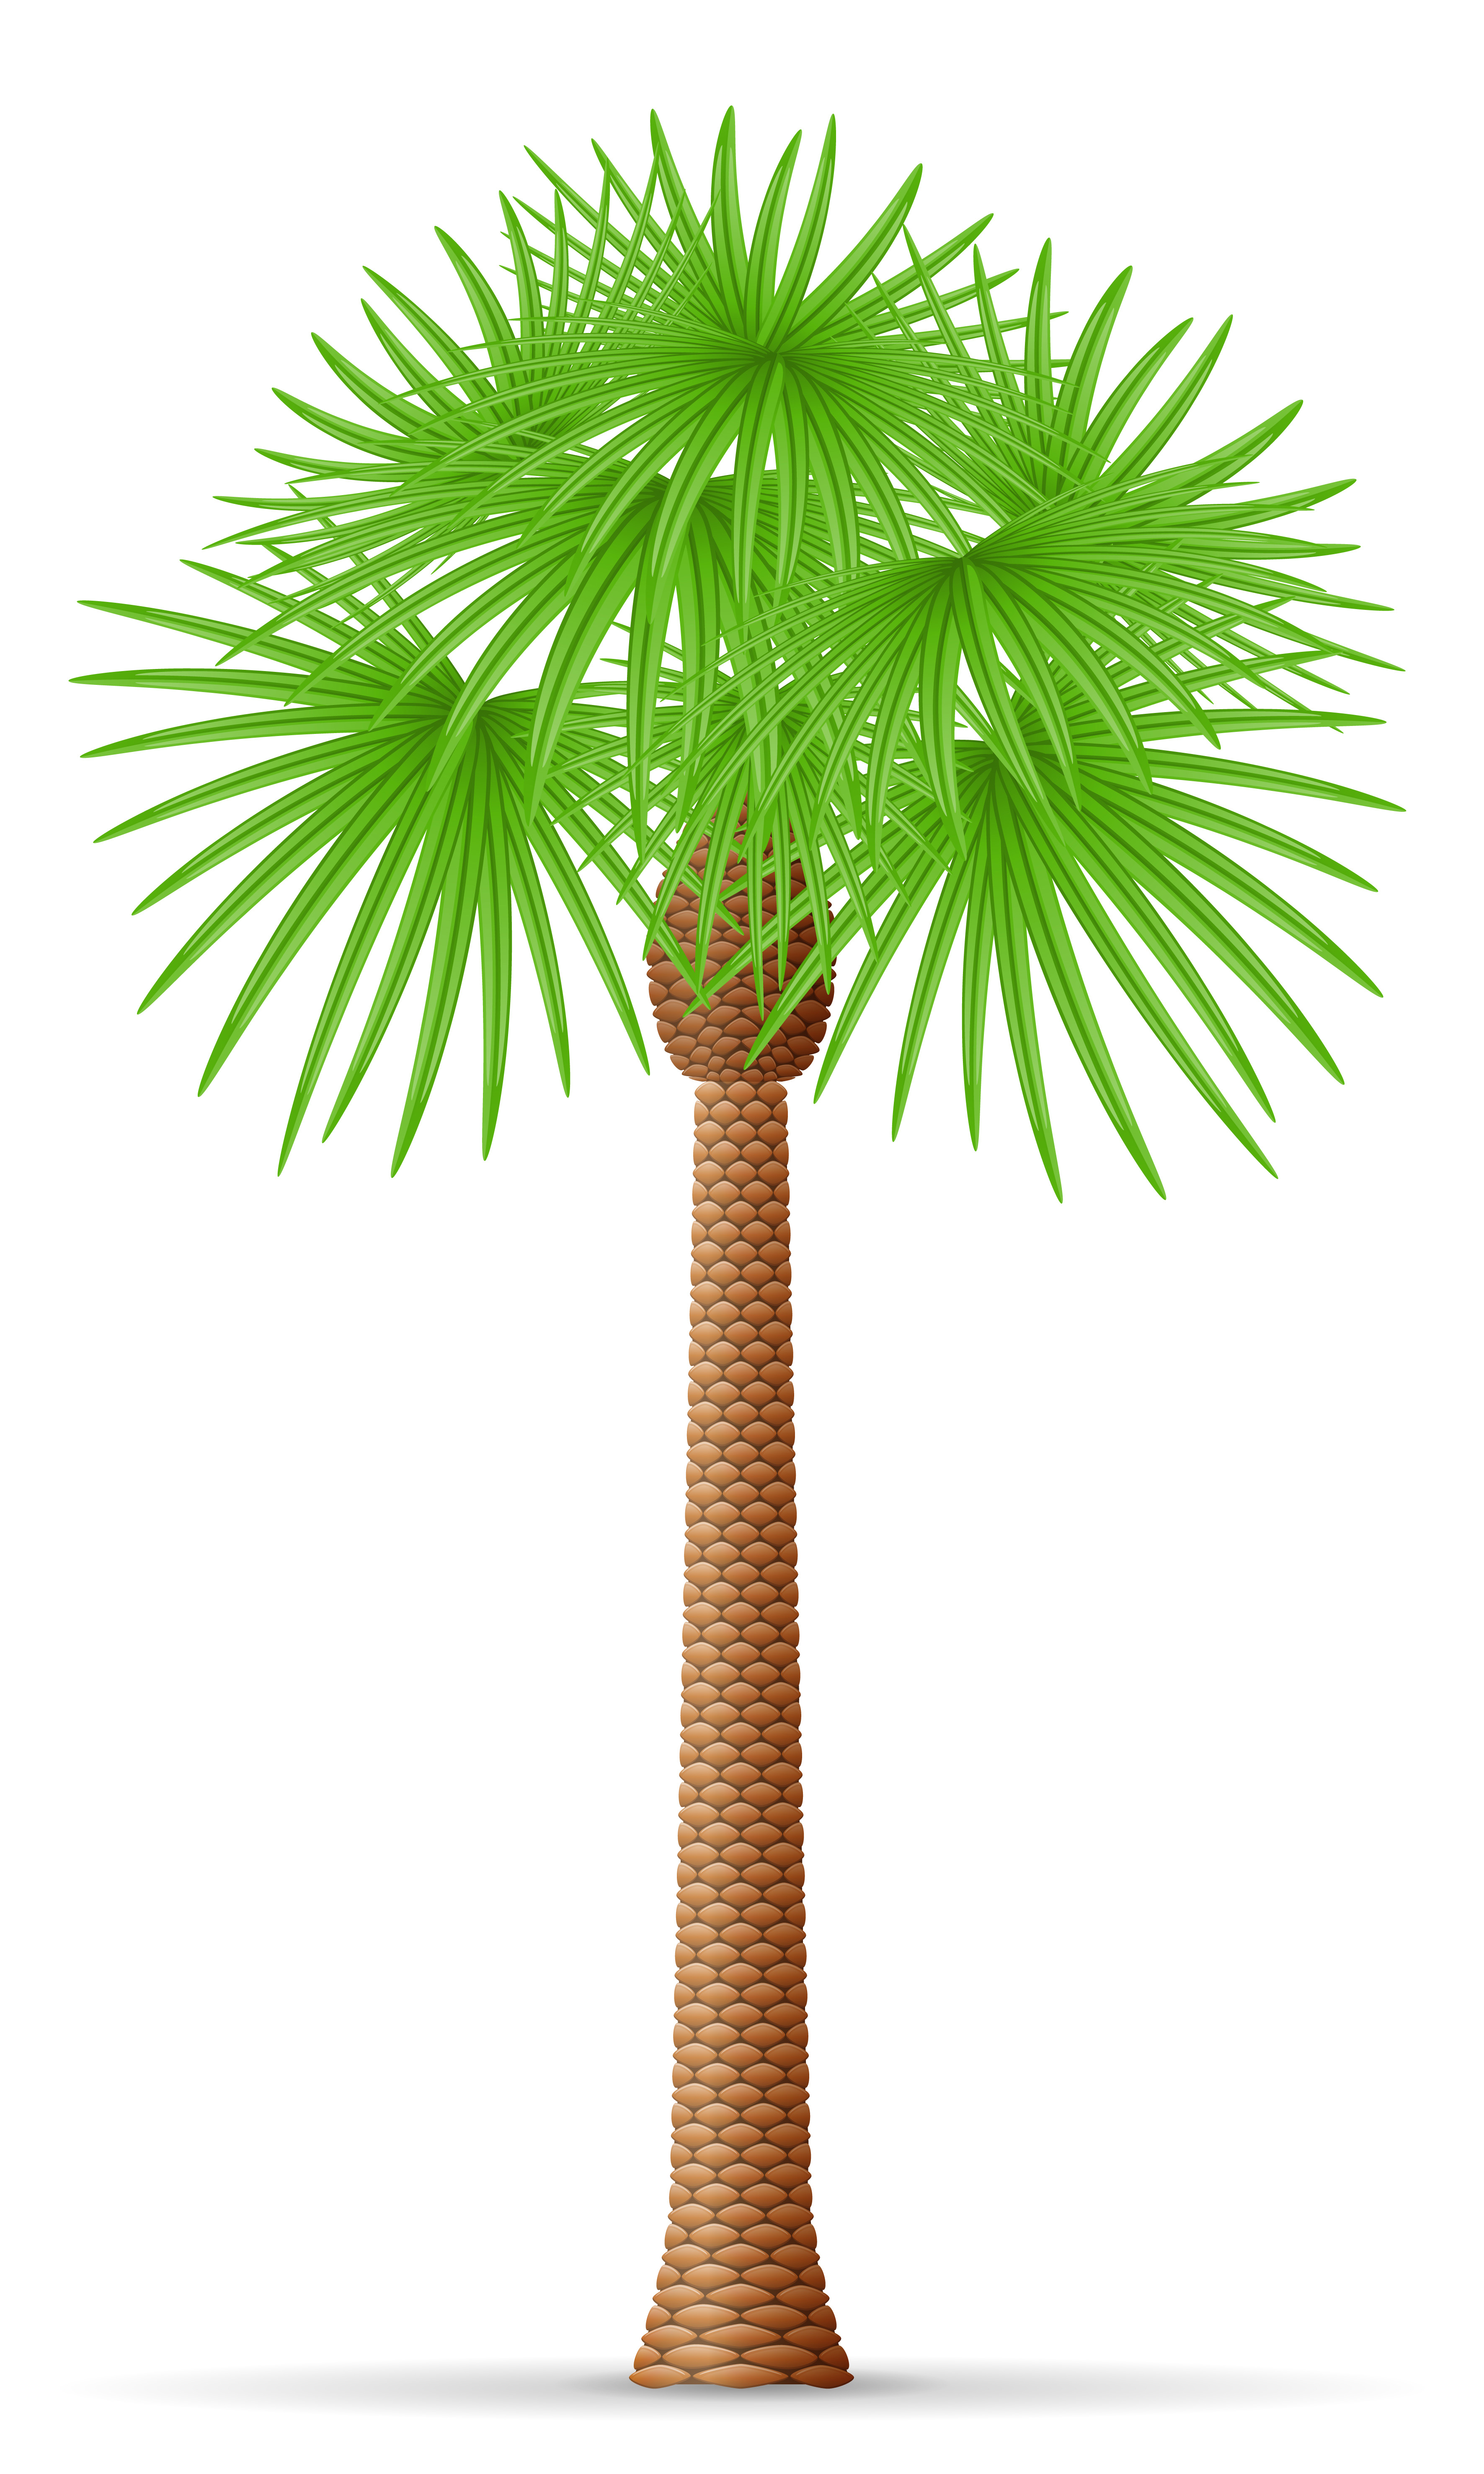  palm  tree vector  illustration Download Free Vectors 